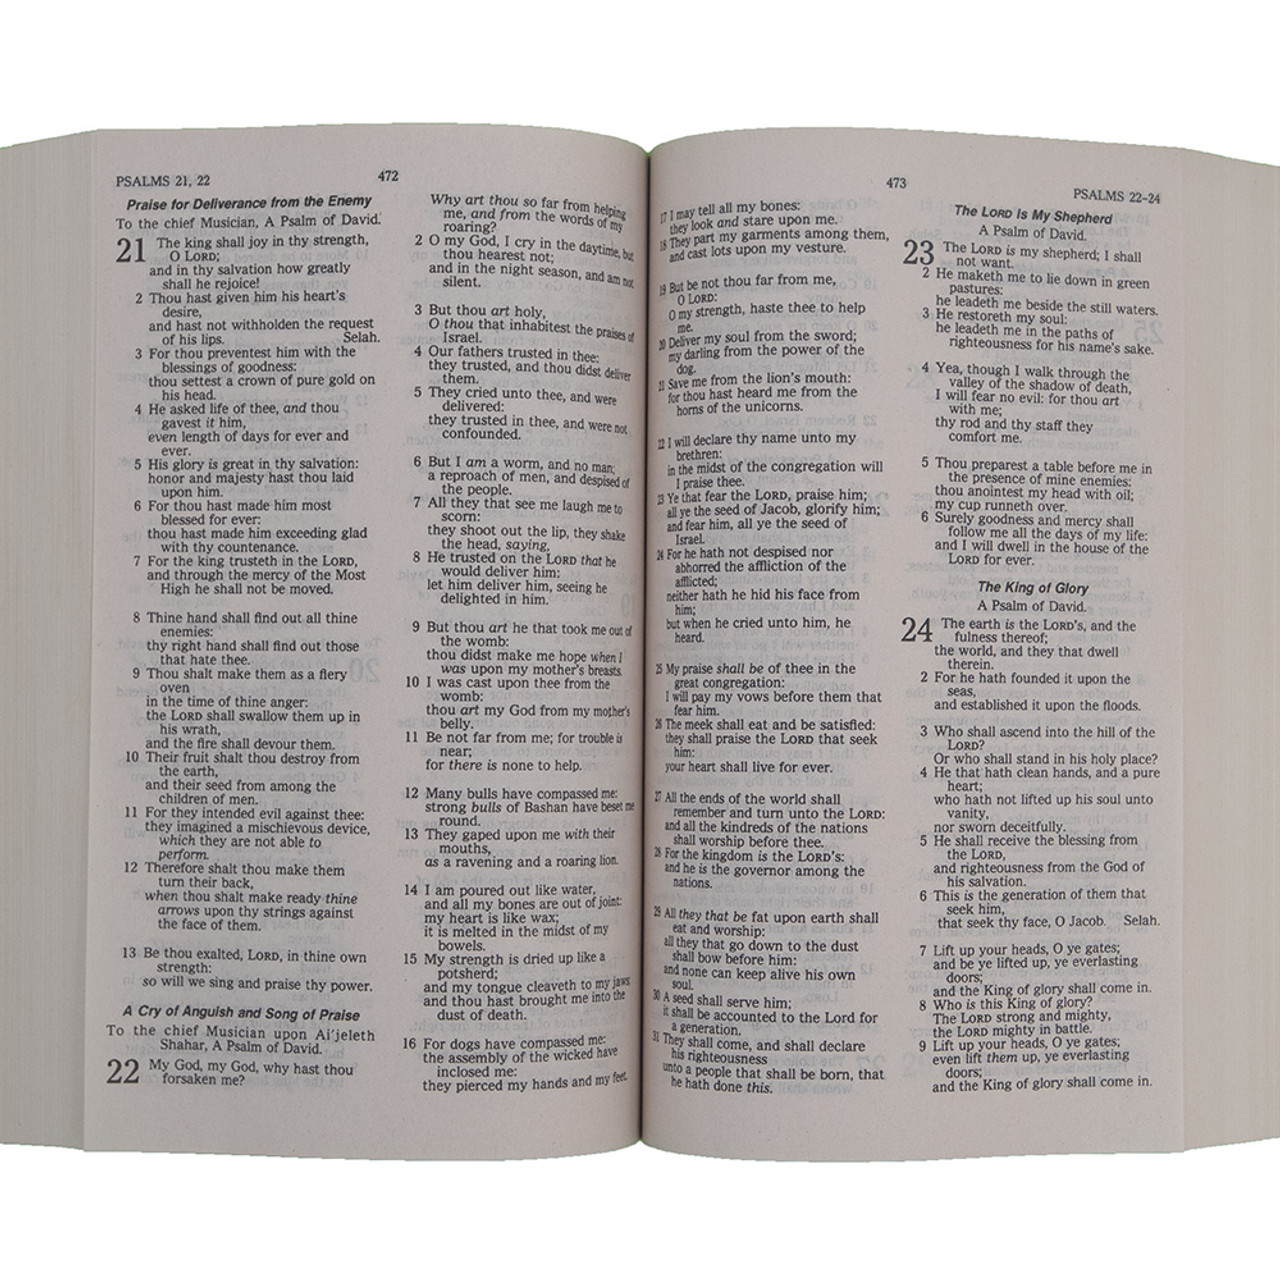 Holy Bible: King James Version (eBook) - Christian Science Online Shop